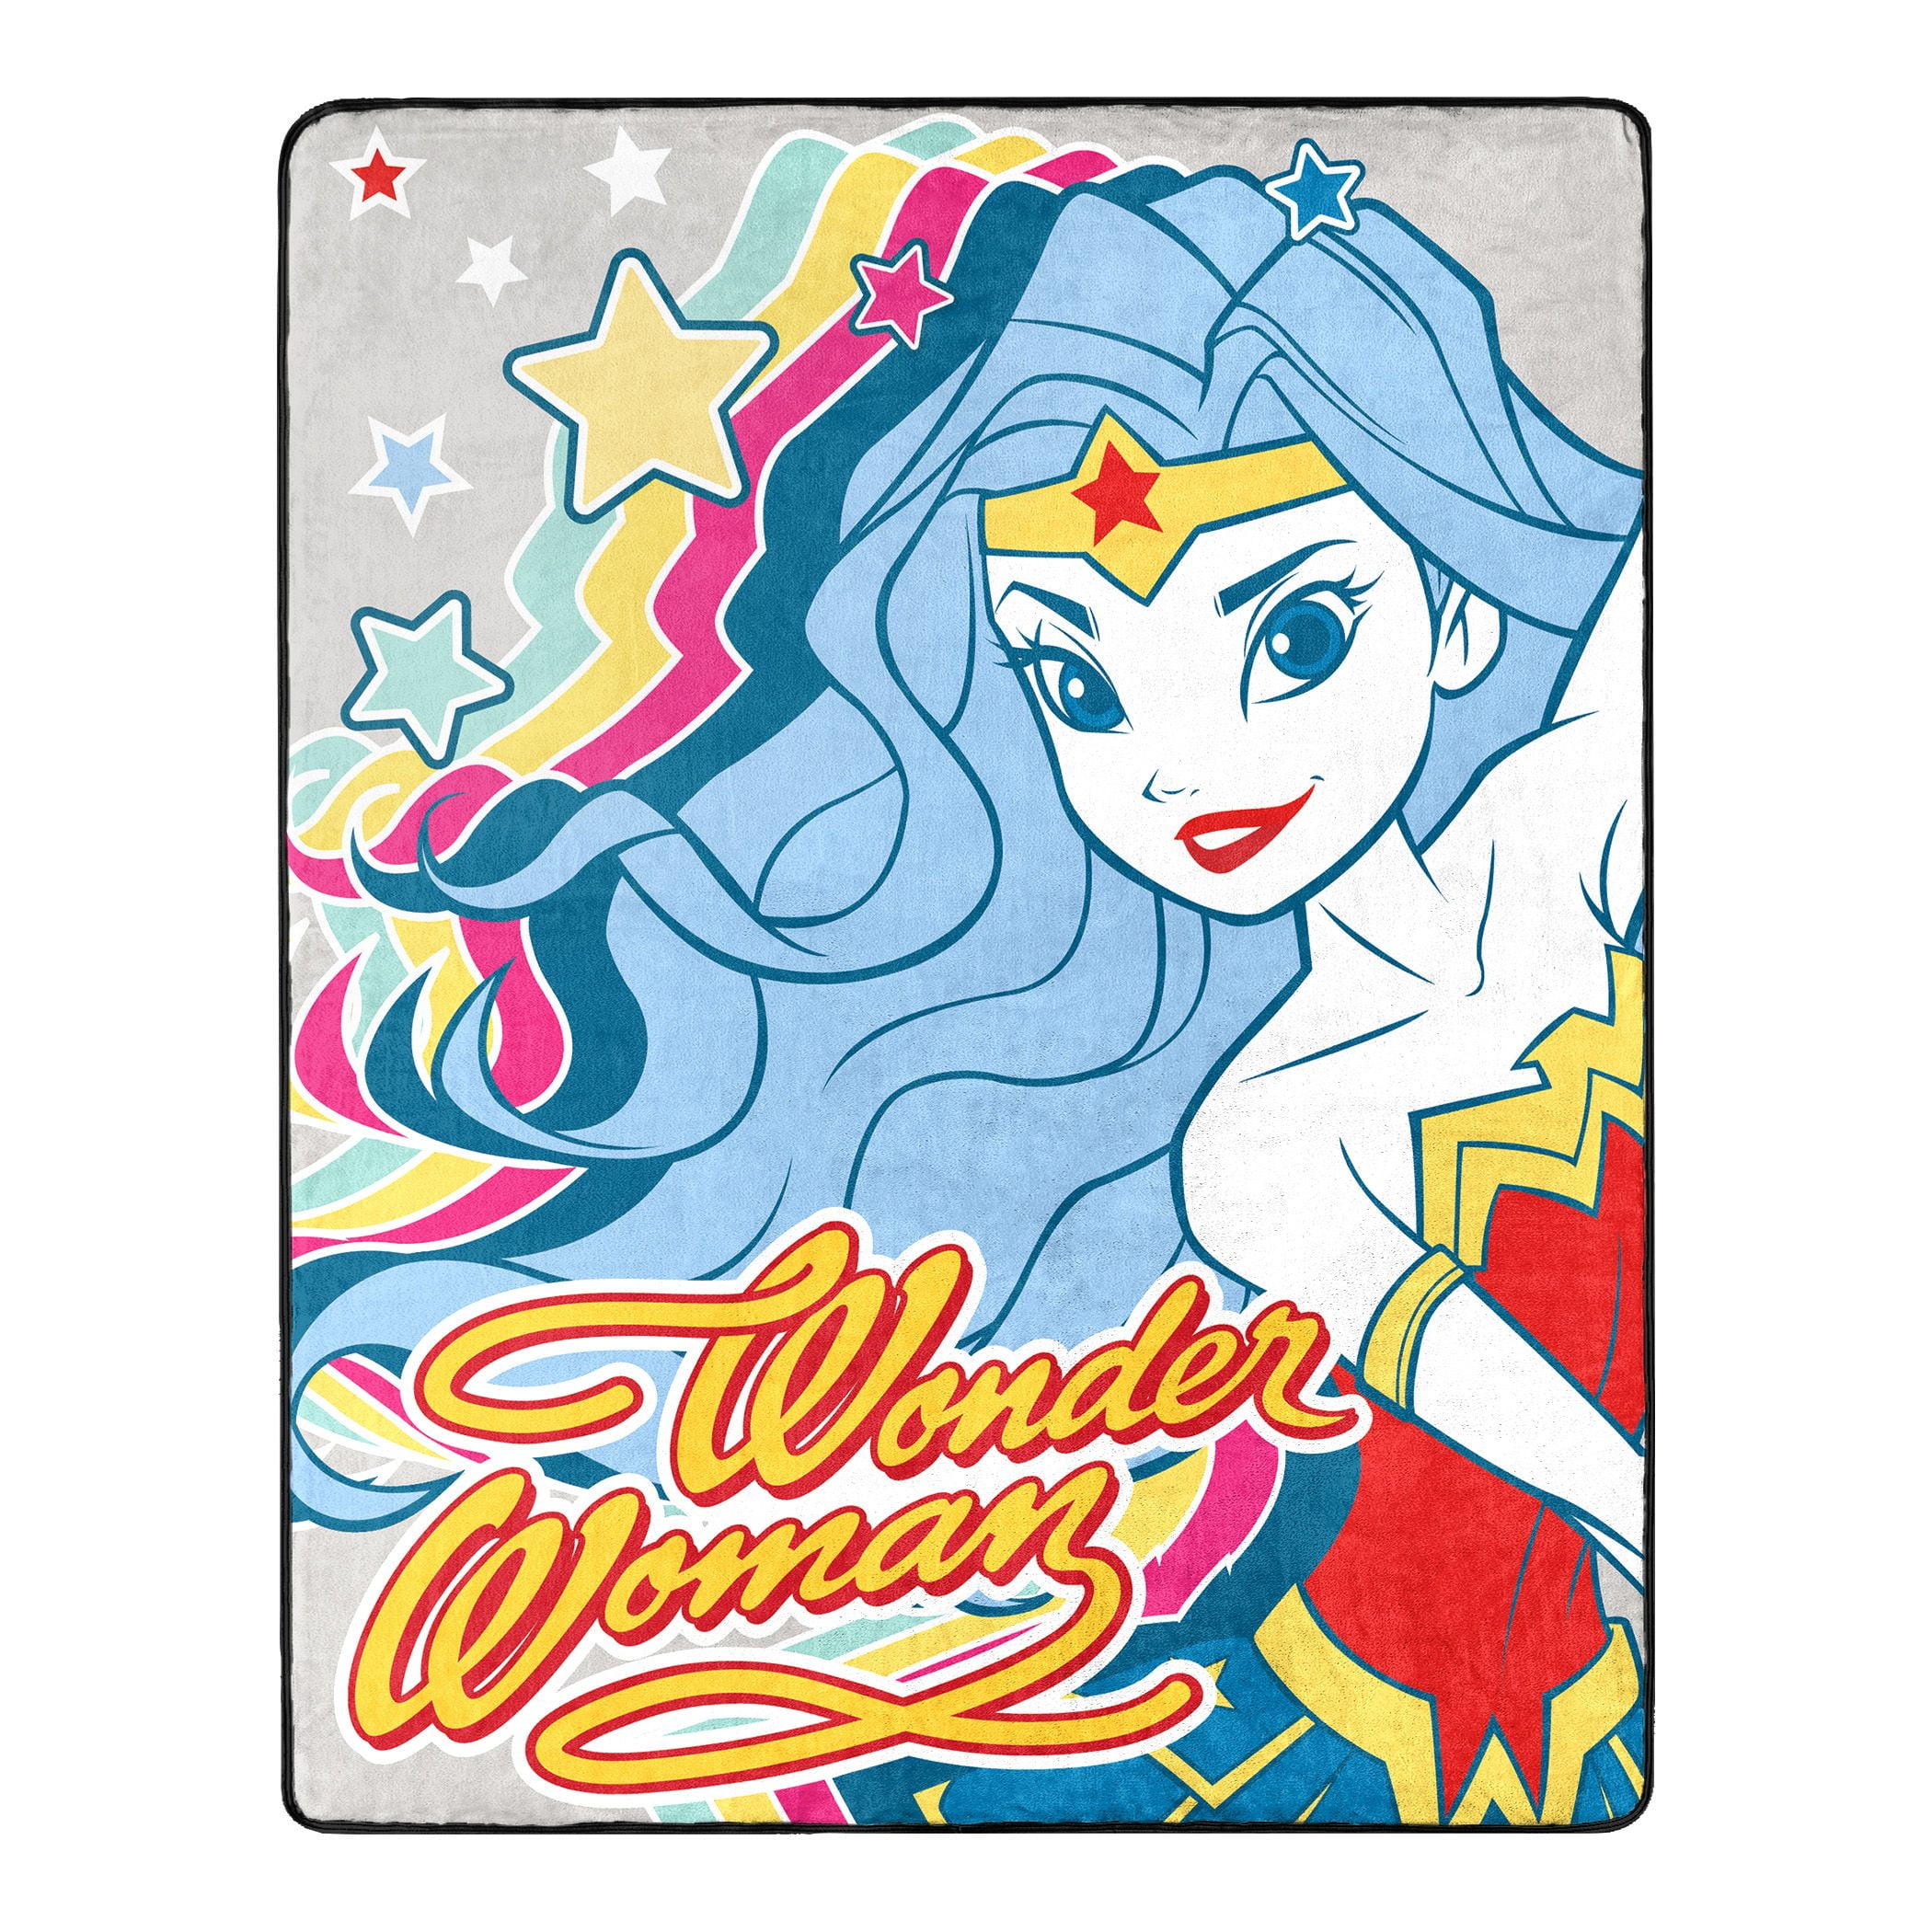 Supergirl & BatWoman Fleece Throw blanket material 54" x 60" NEW!! Wonder Woman 